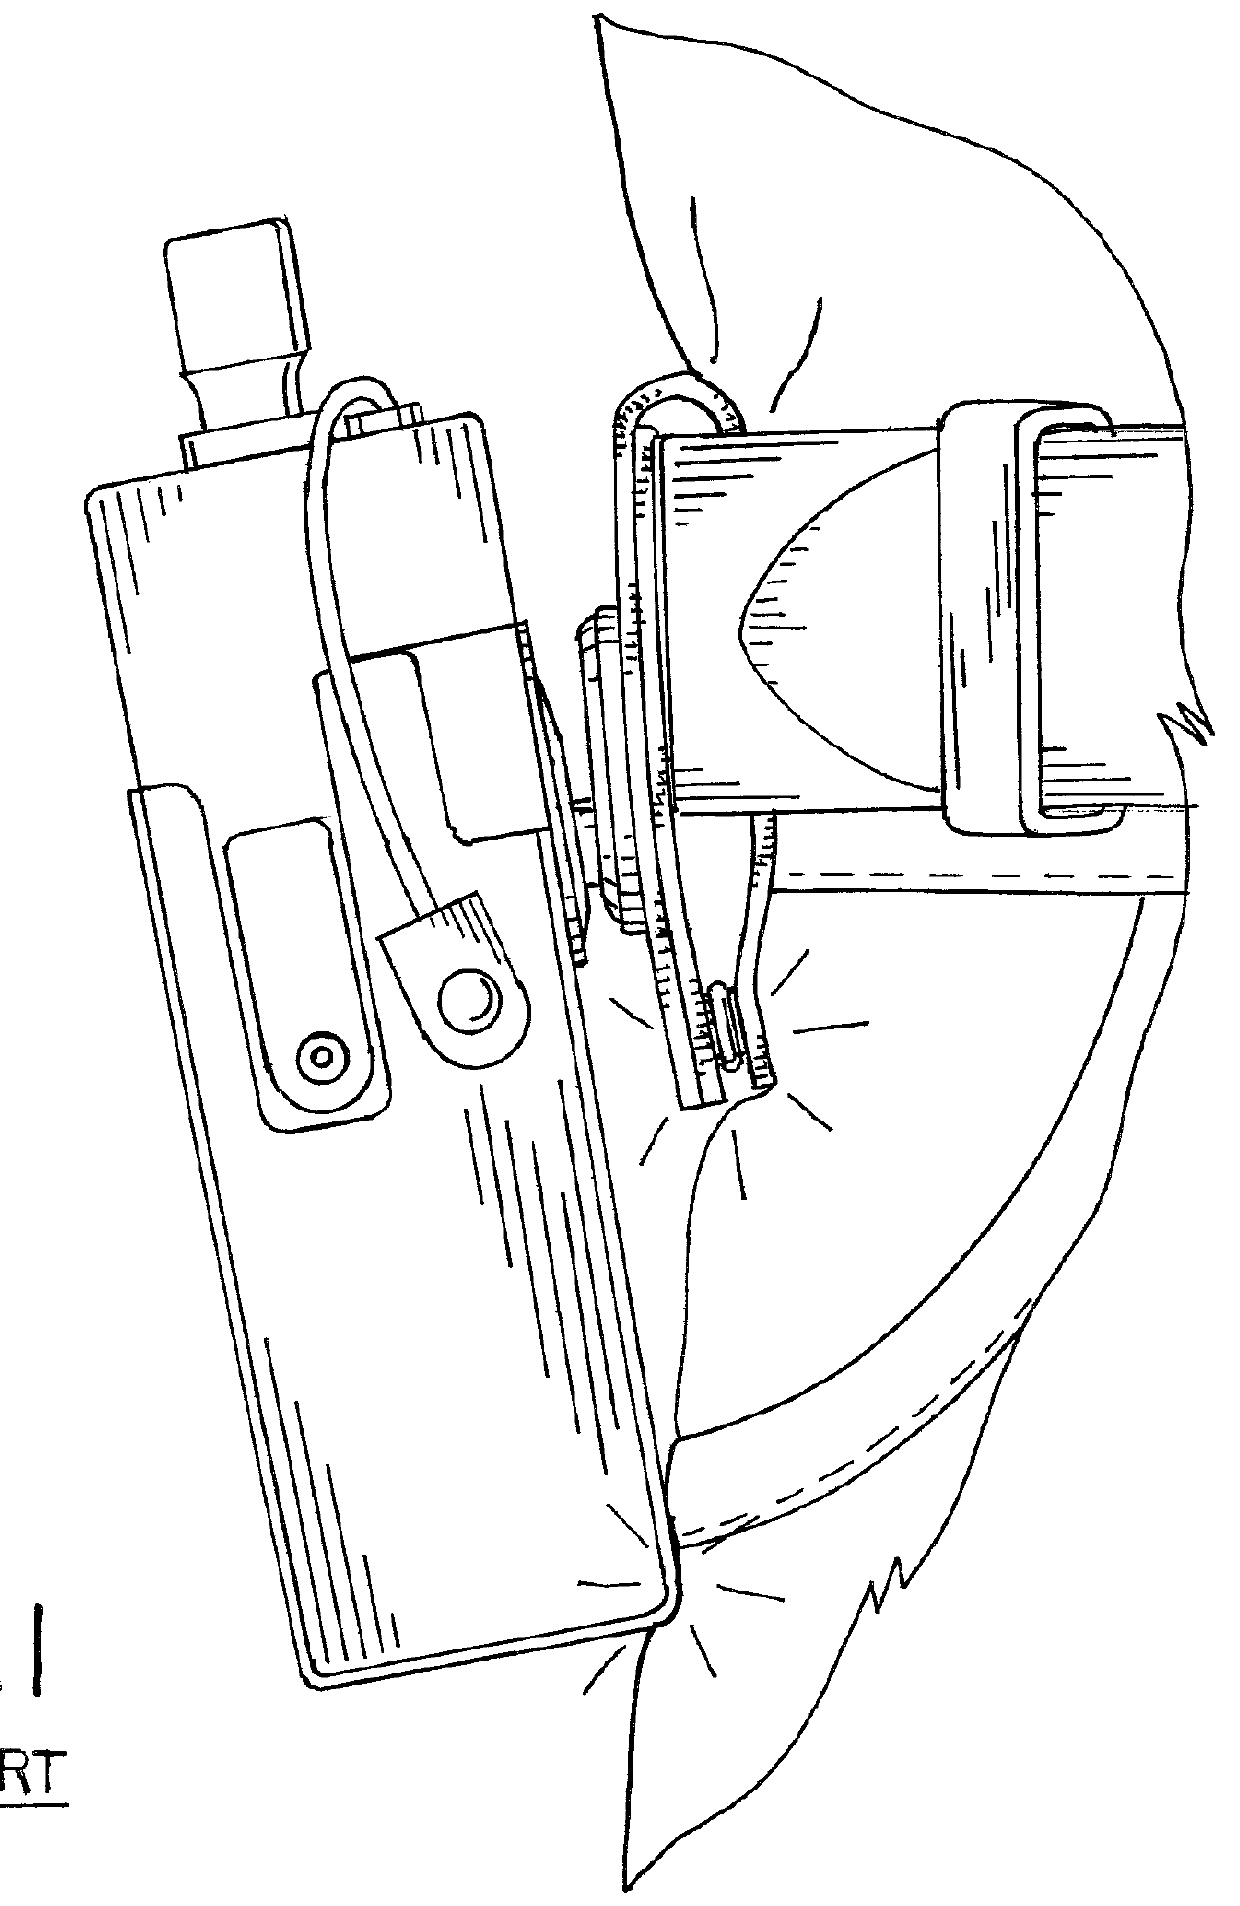 Belt hanger for handheld device